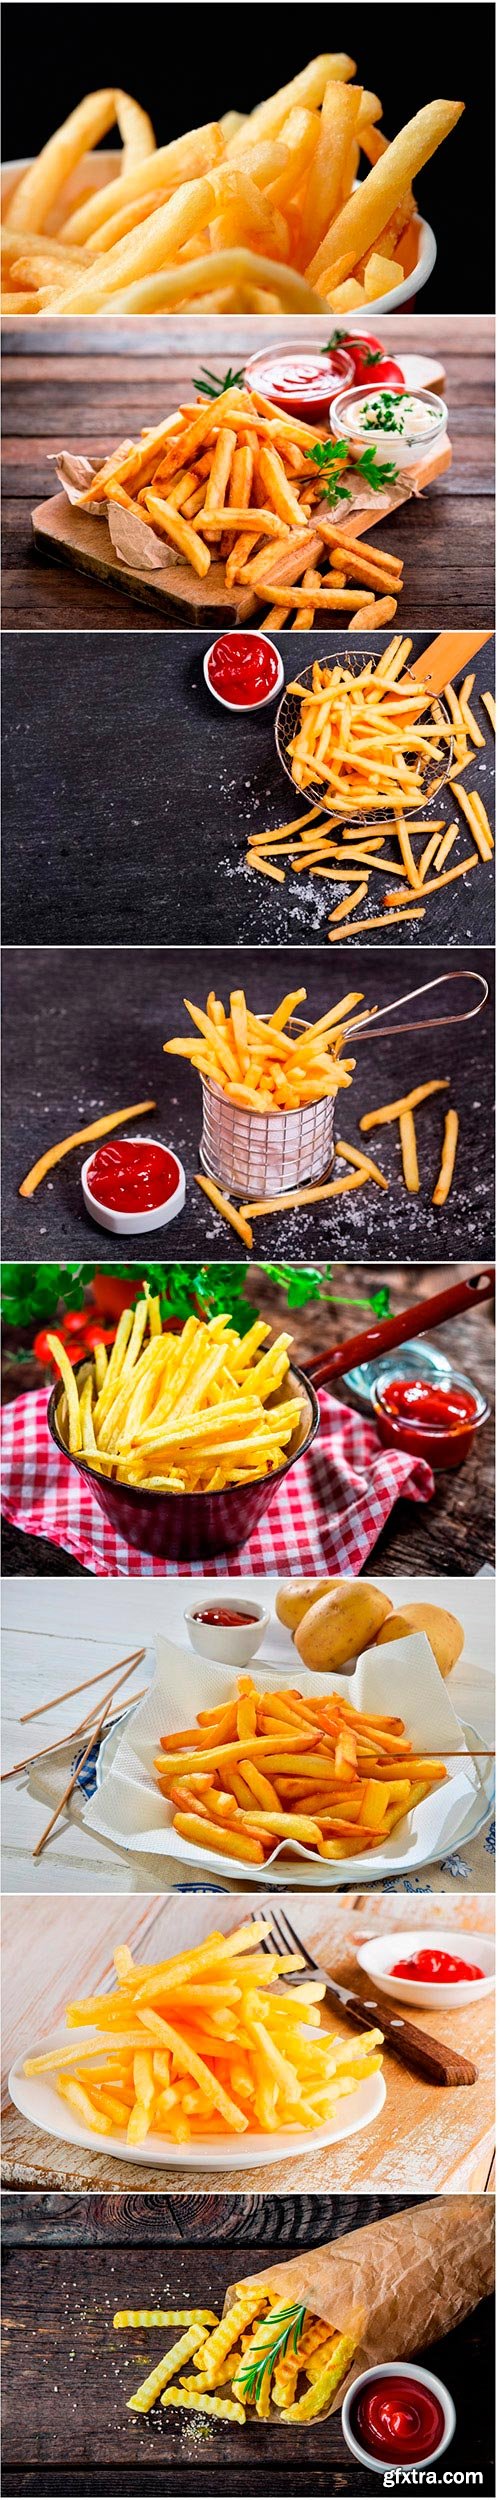 French fries - 8UHQ JPEG